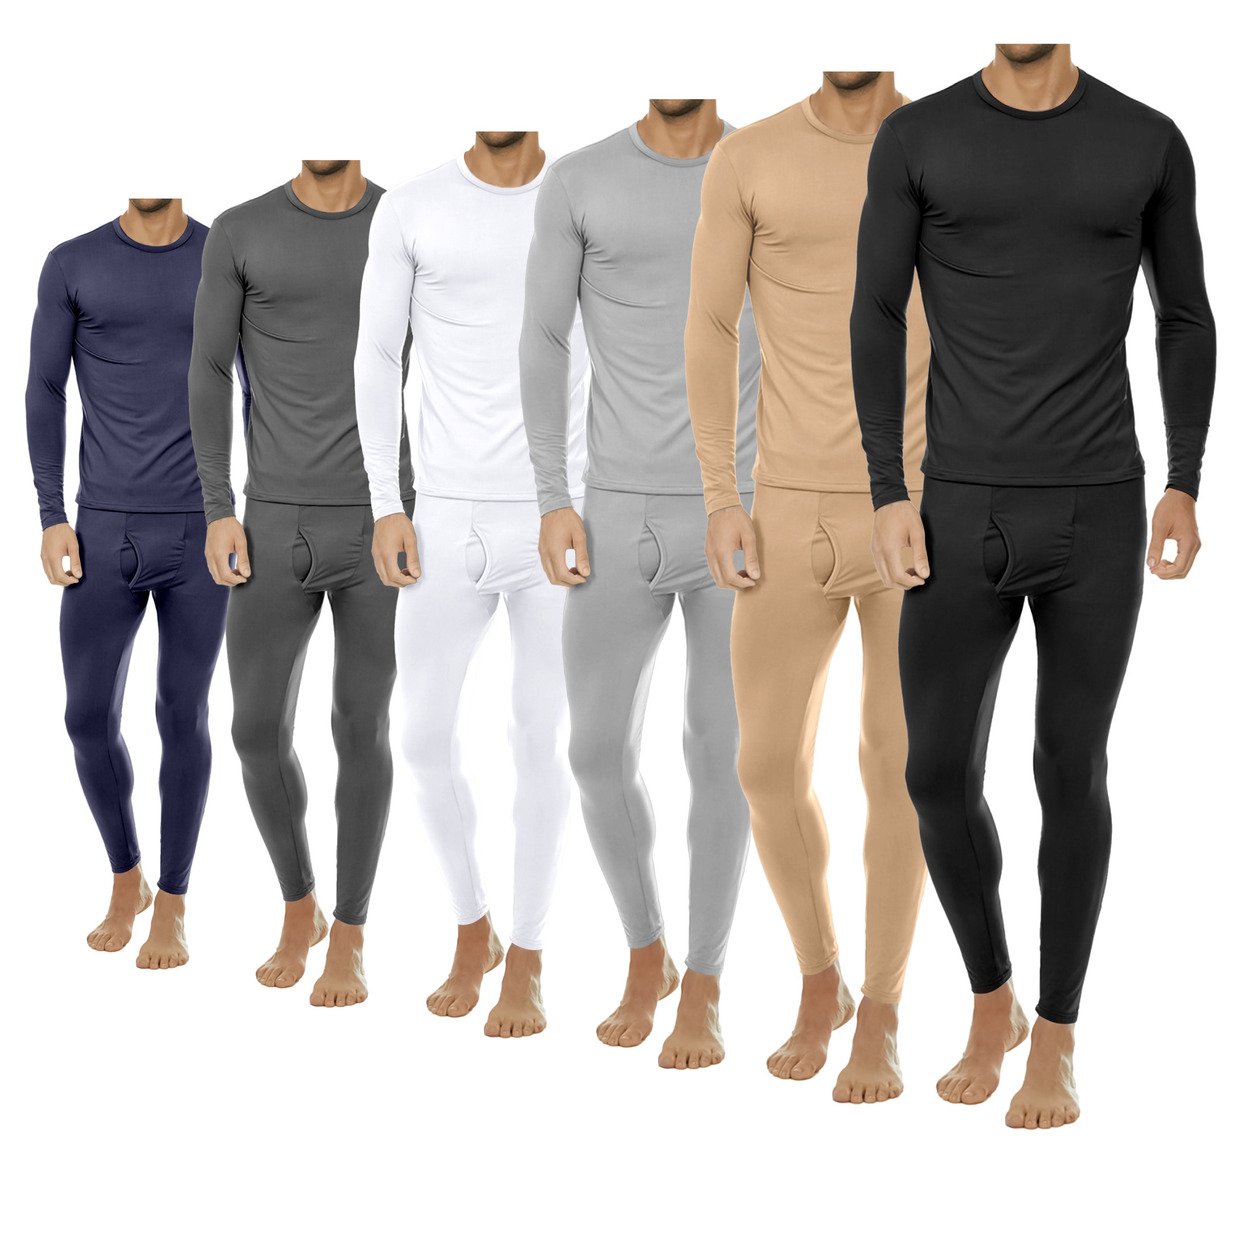 2-Sets: Men's Winter Warm Fleece Lined Thermal Underwear Set For Cold Weather - Black&grey, Medium